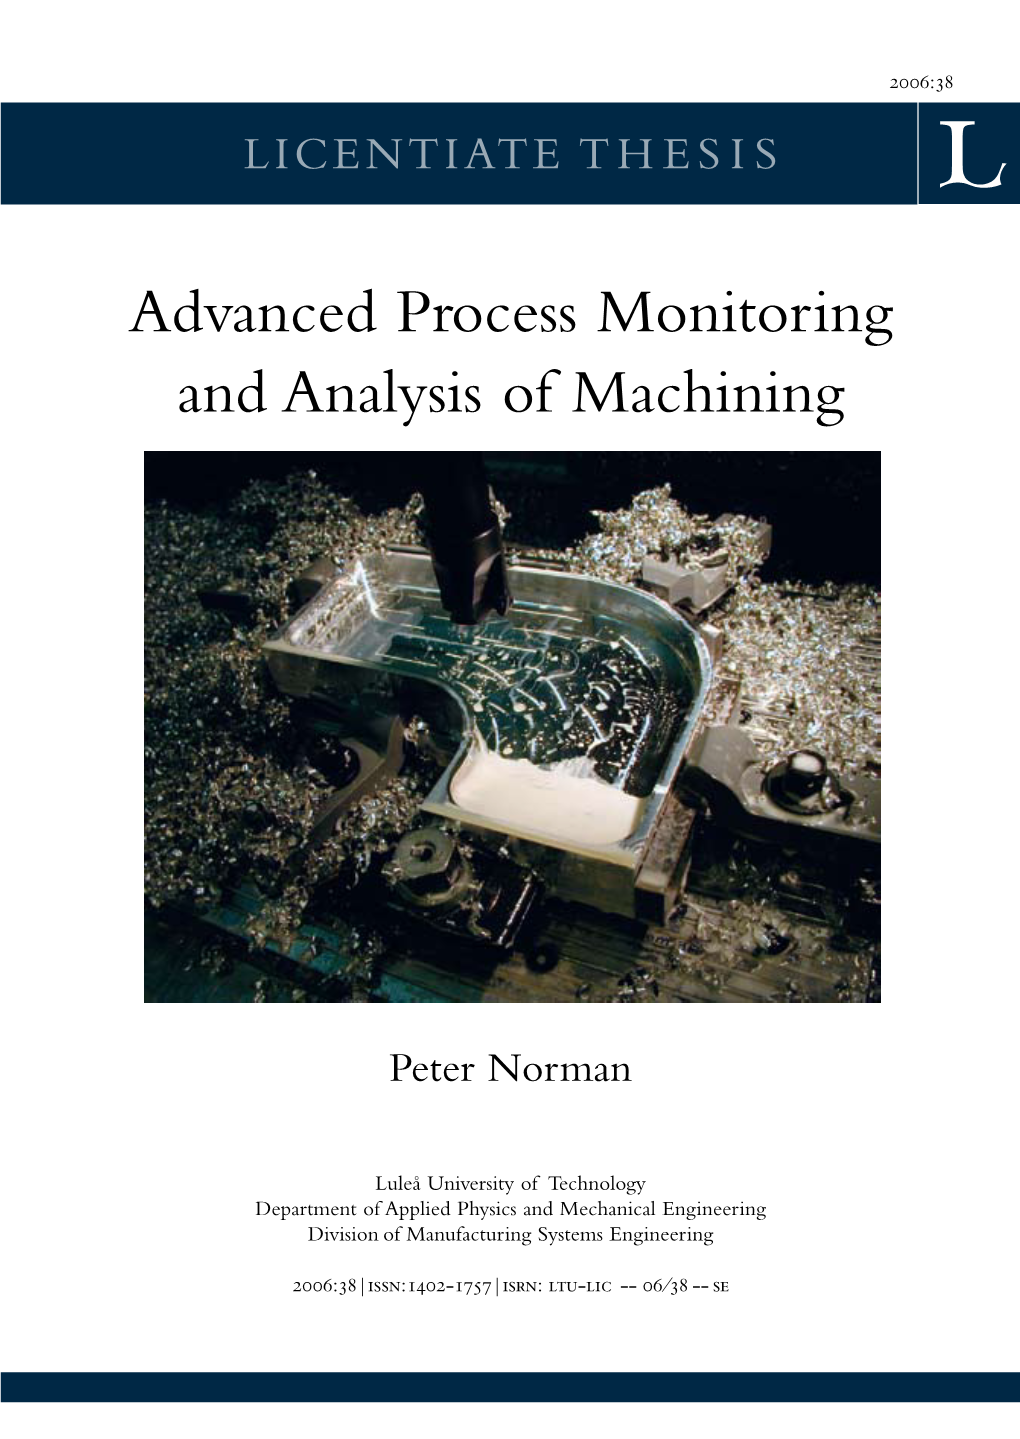 Advanced Process Monitoring and Analysis of Machining